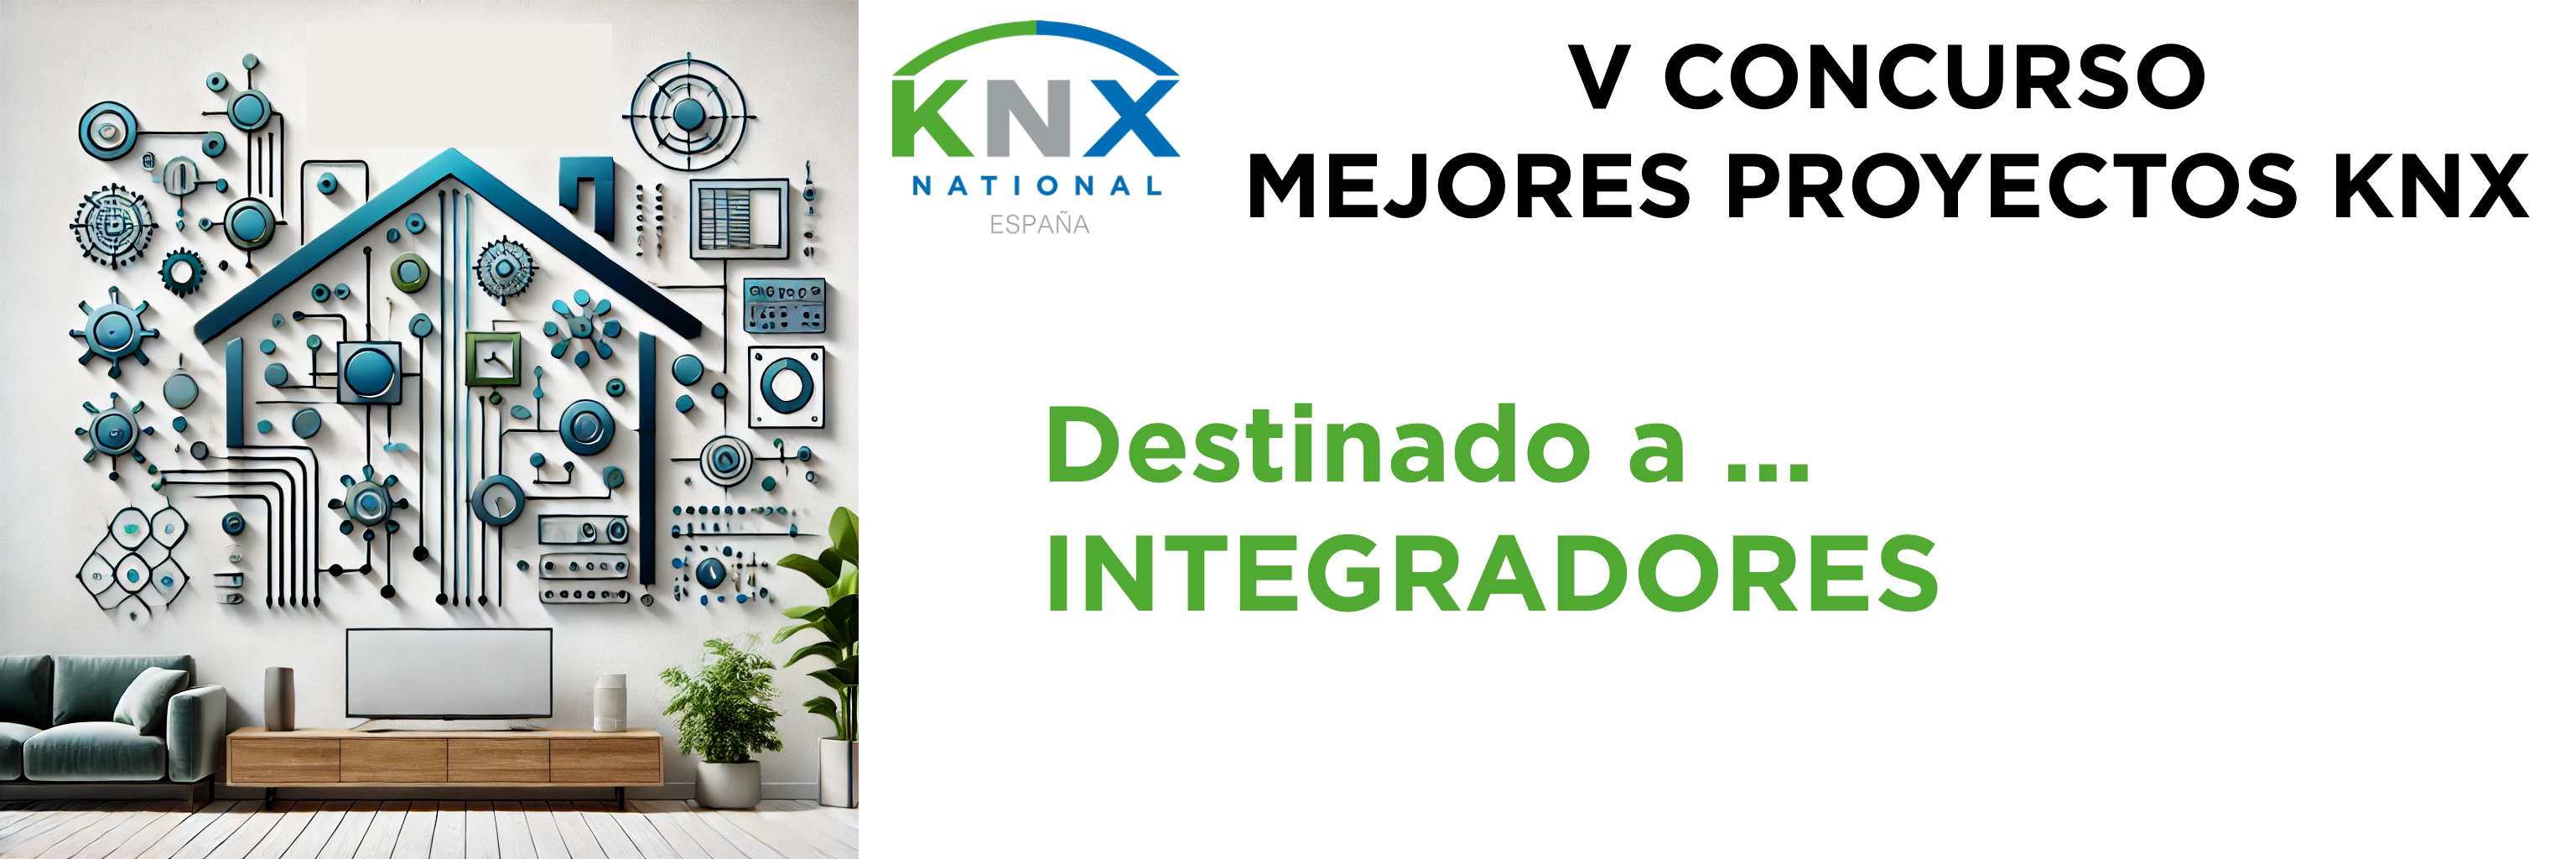 Bienvenido a KNX España